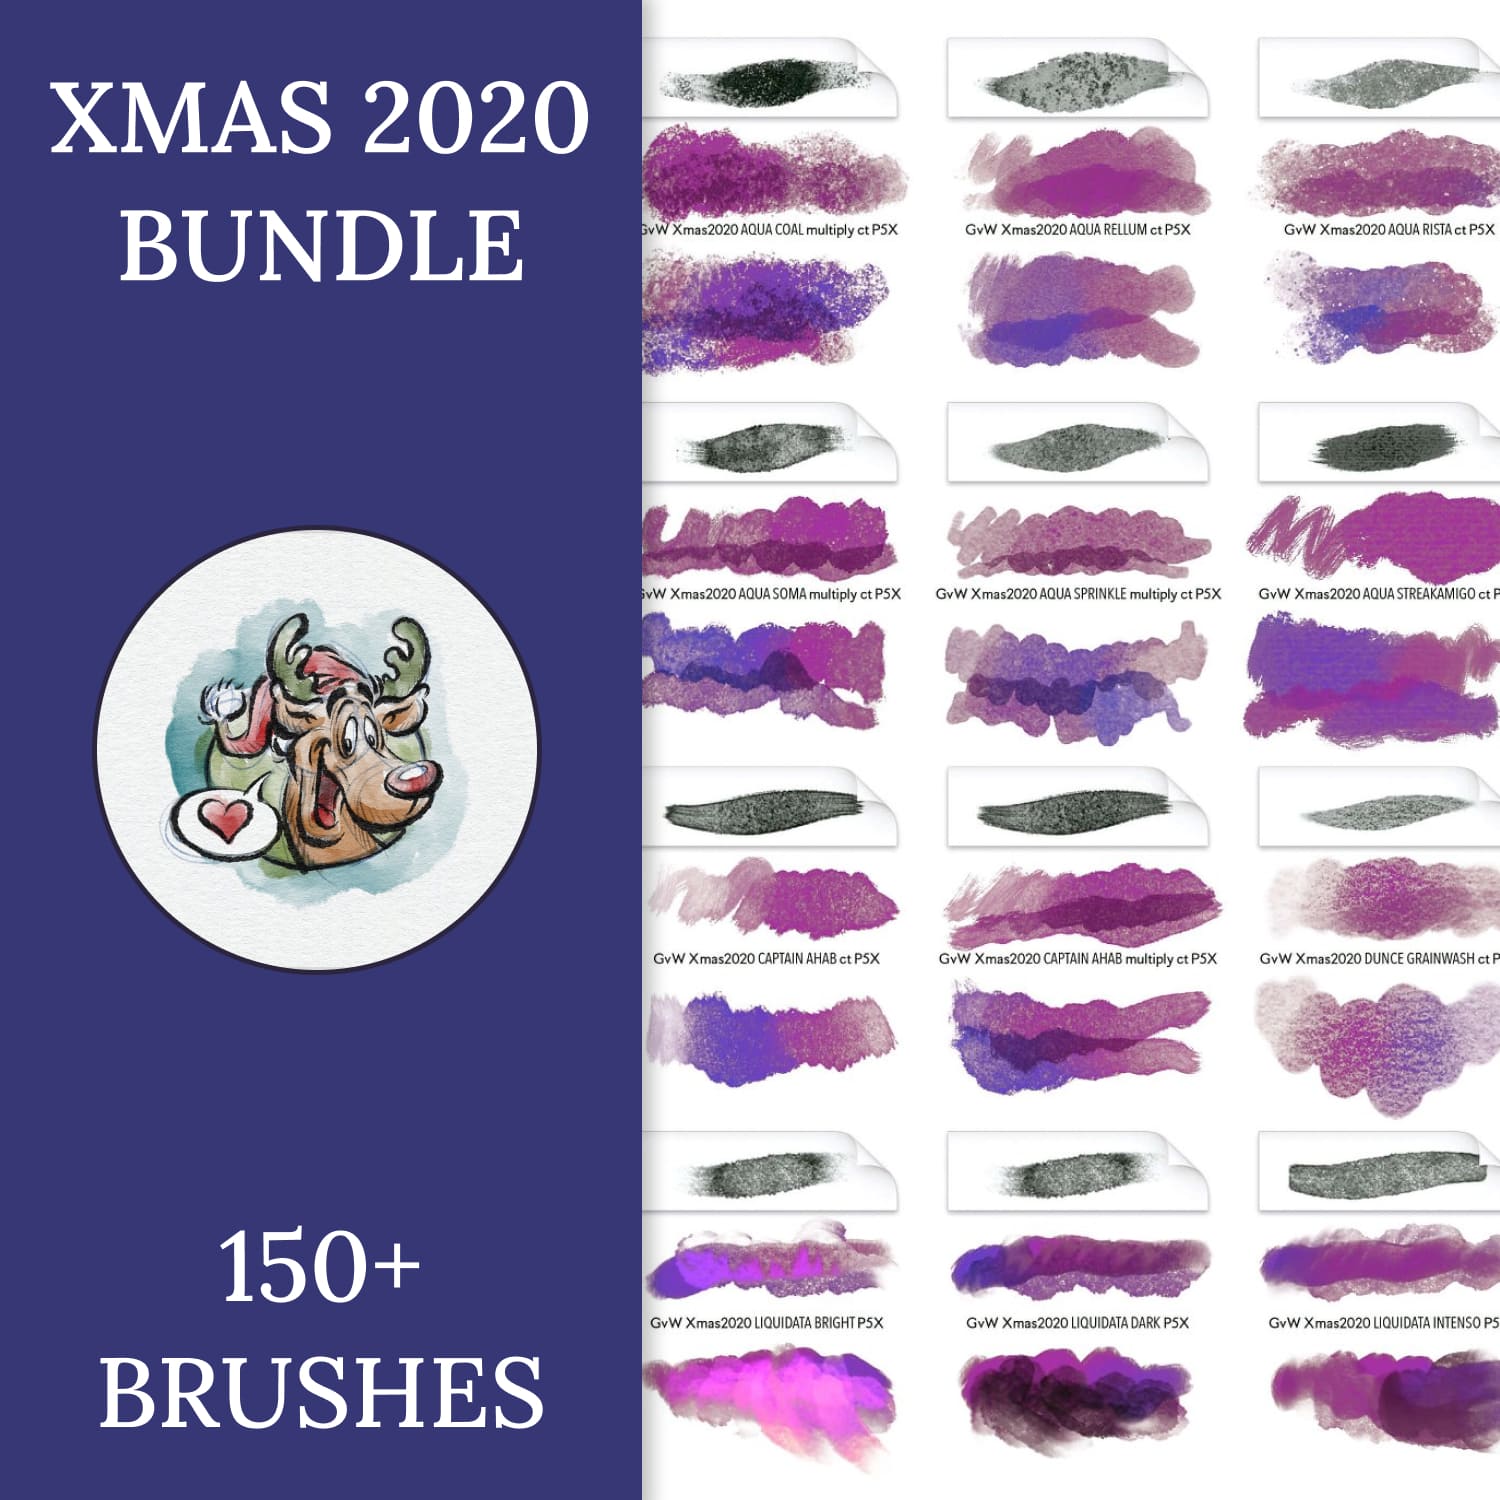 Xmas 2020 bundle 150 brushes, 1500 by 1500 pixels.